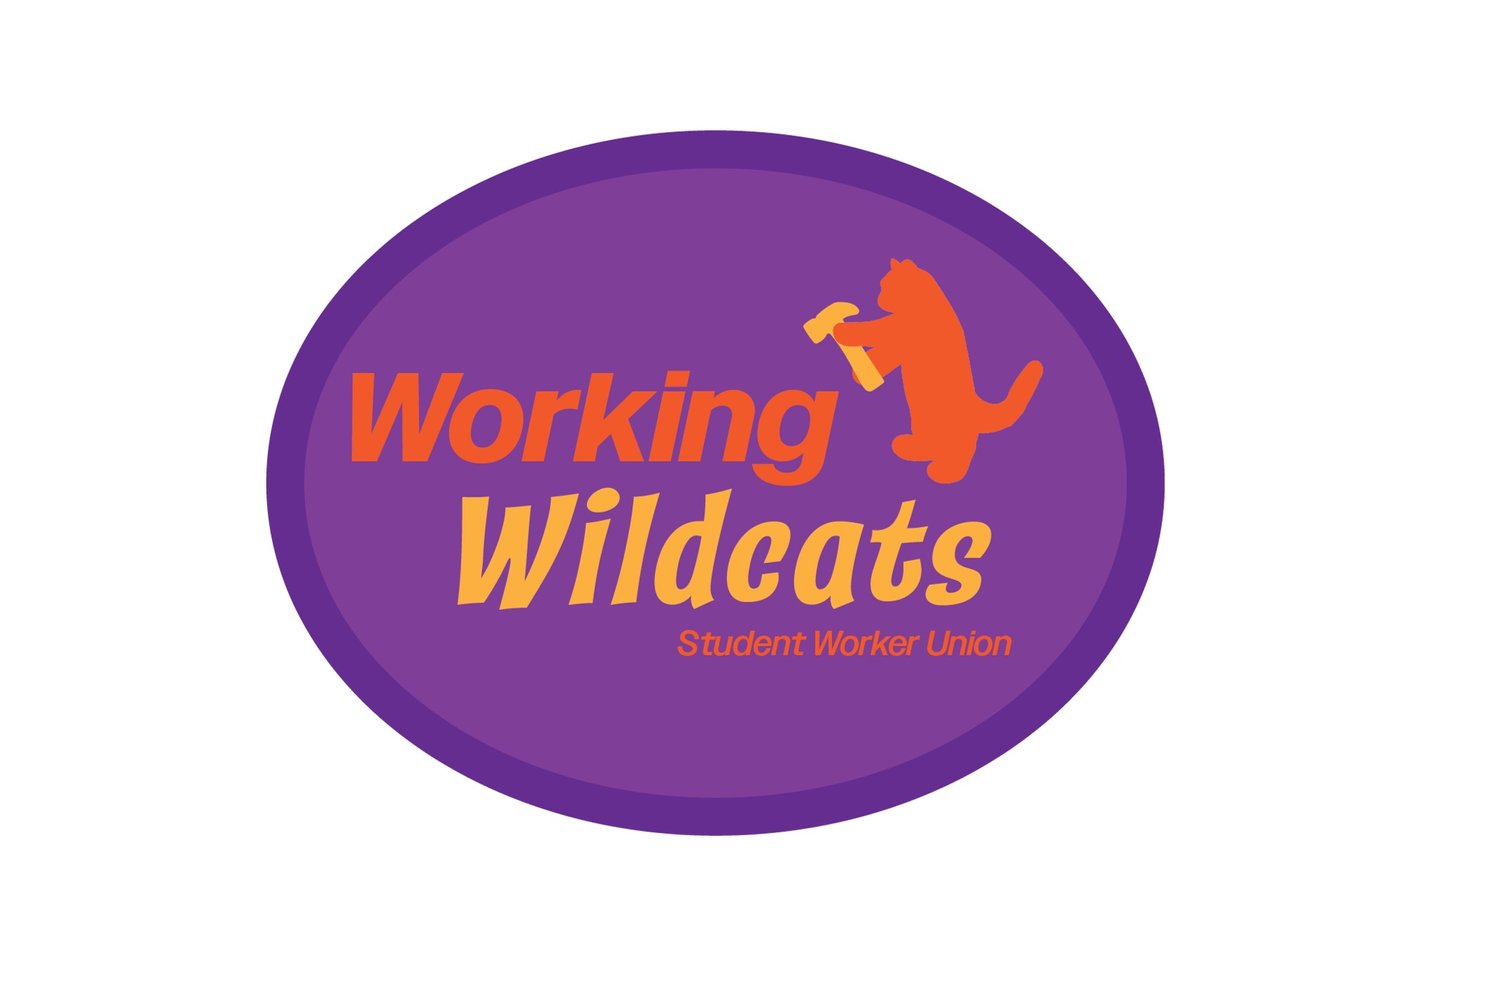 The Working Wildcats